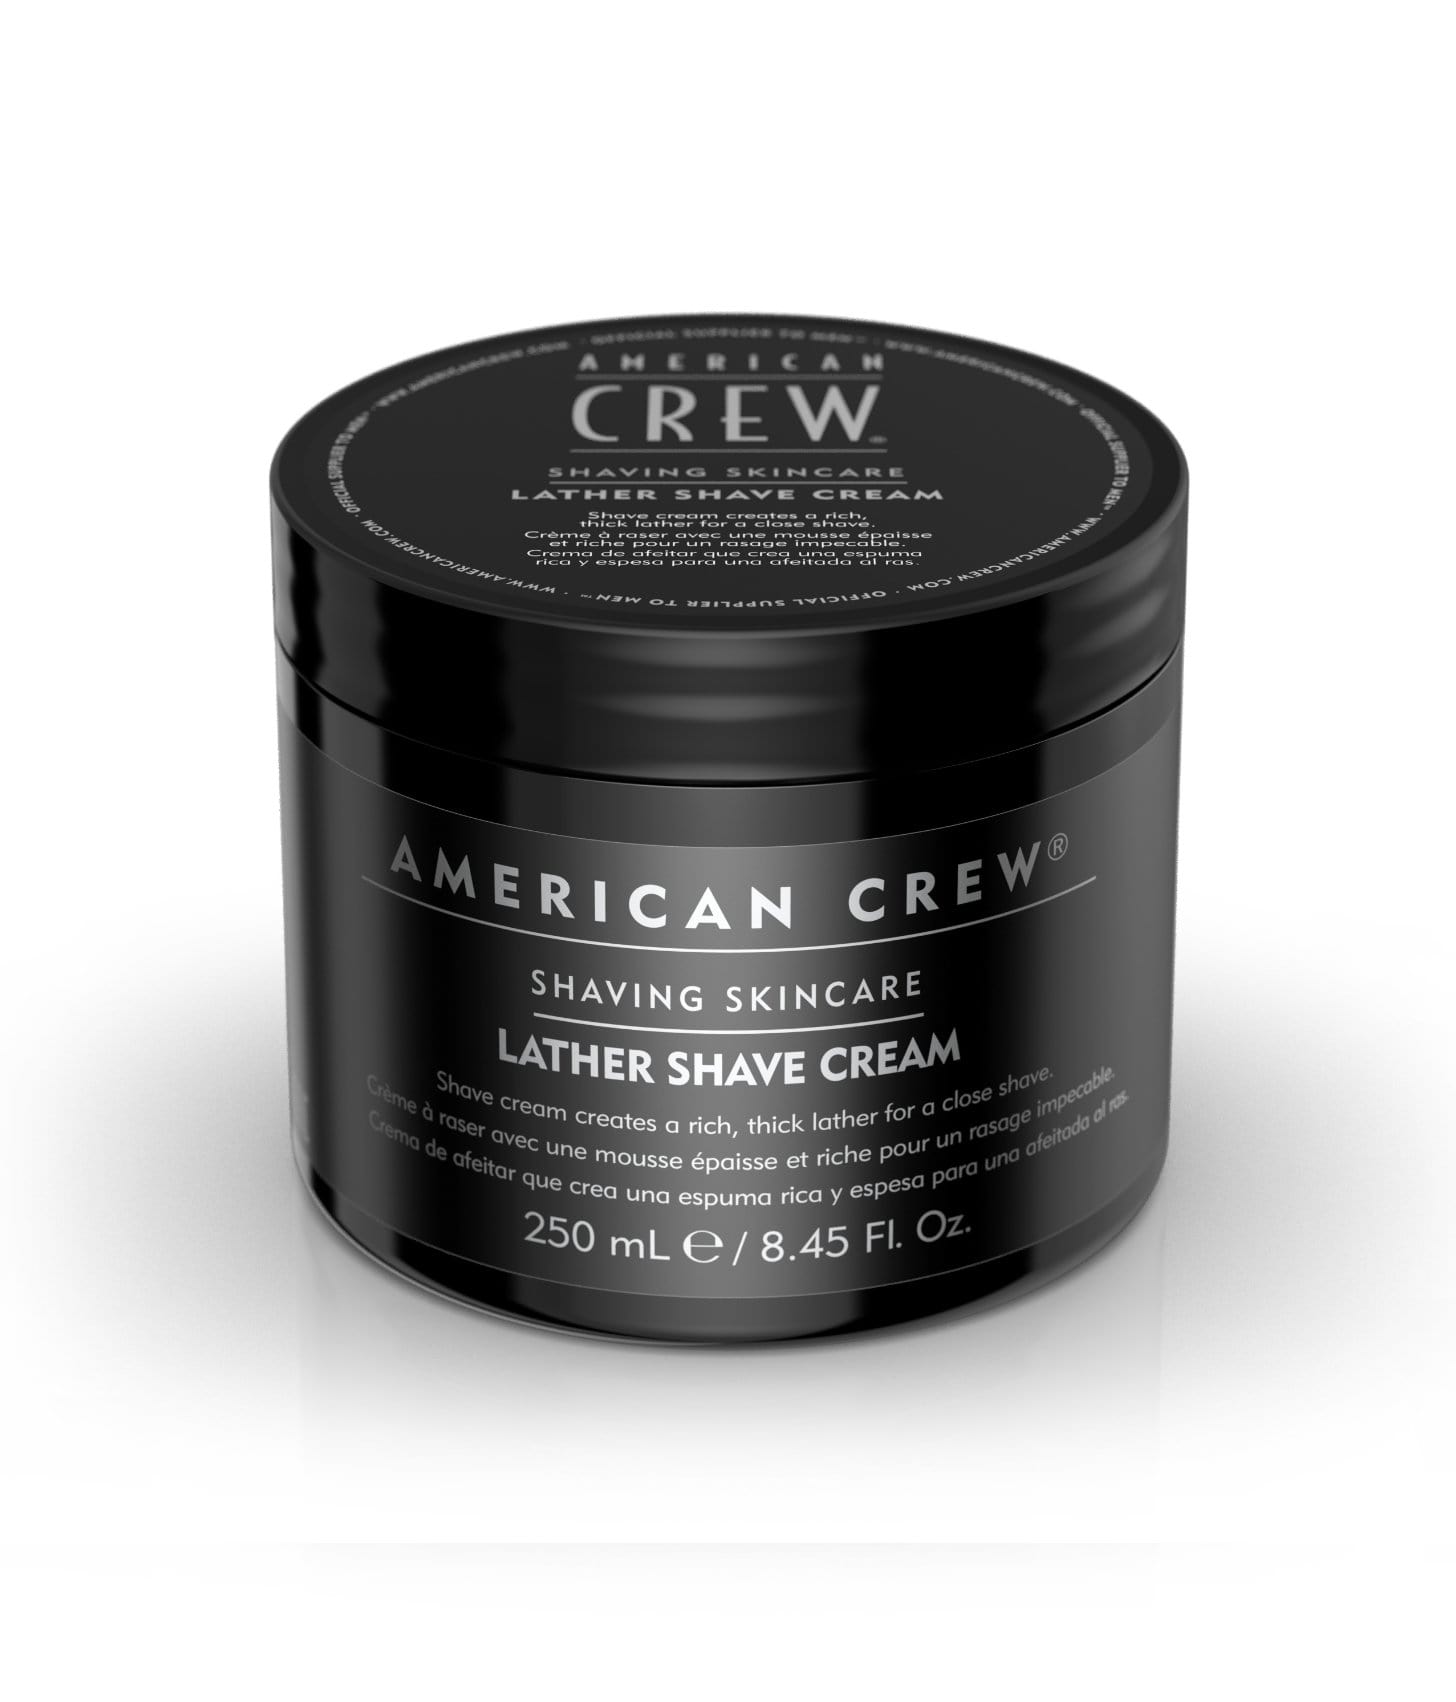 American Crew Lather Shave Cream - Sagema